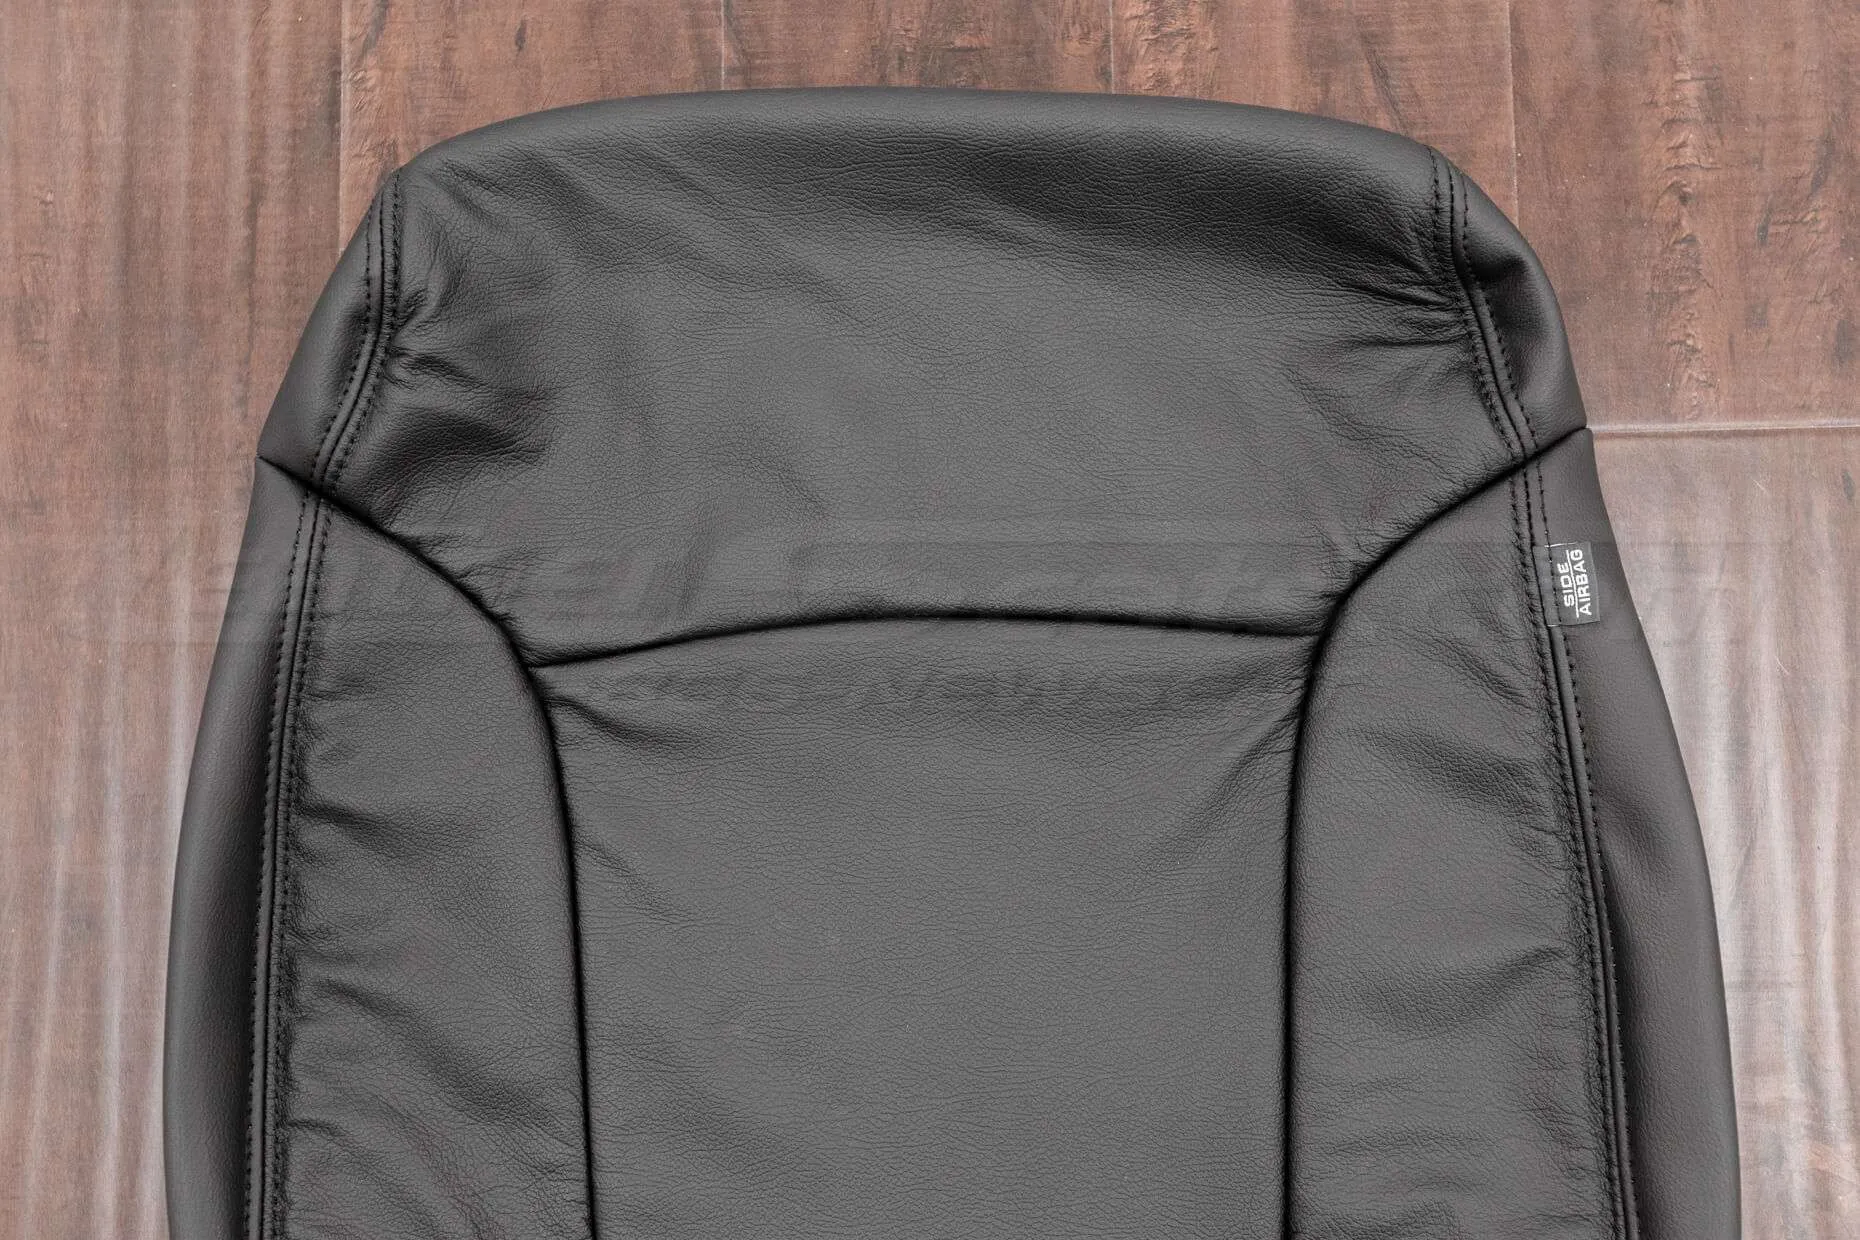 2010-2013 Kia Forte Upholstery Kit- Black - Front backrest close-up